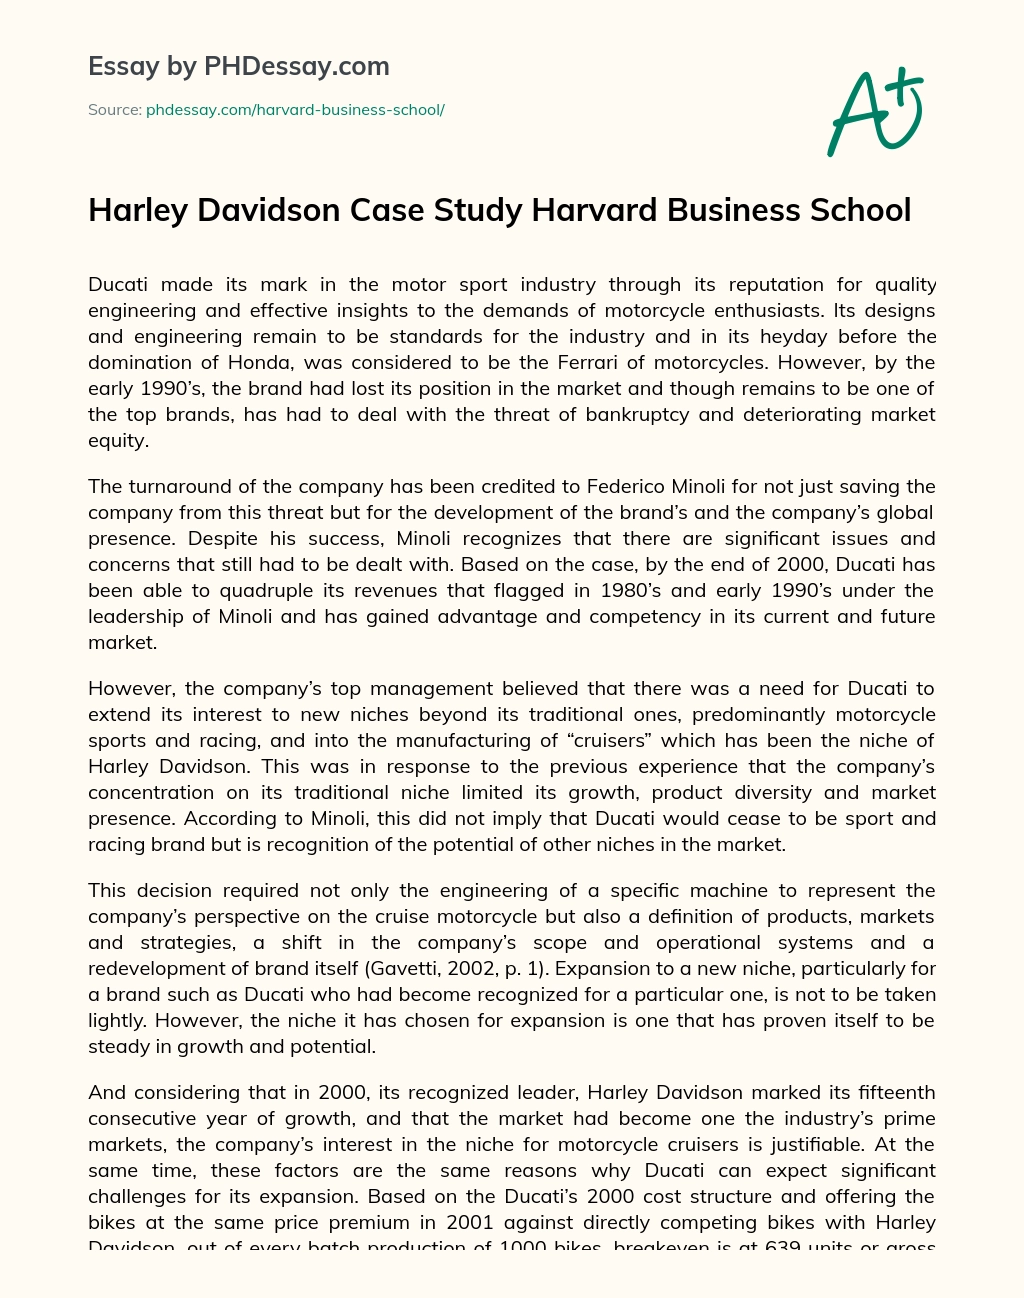 Harley Davidson Case Study Harvard Business School essay